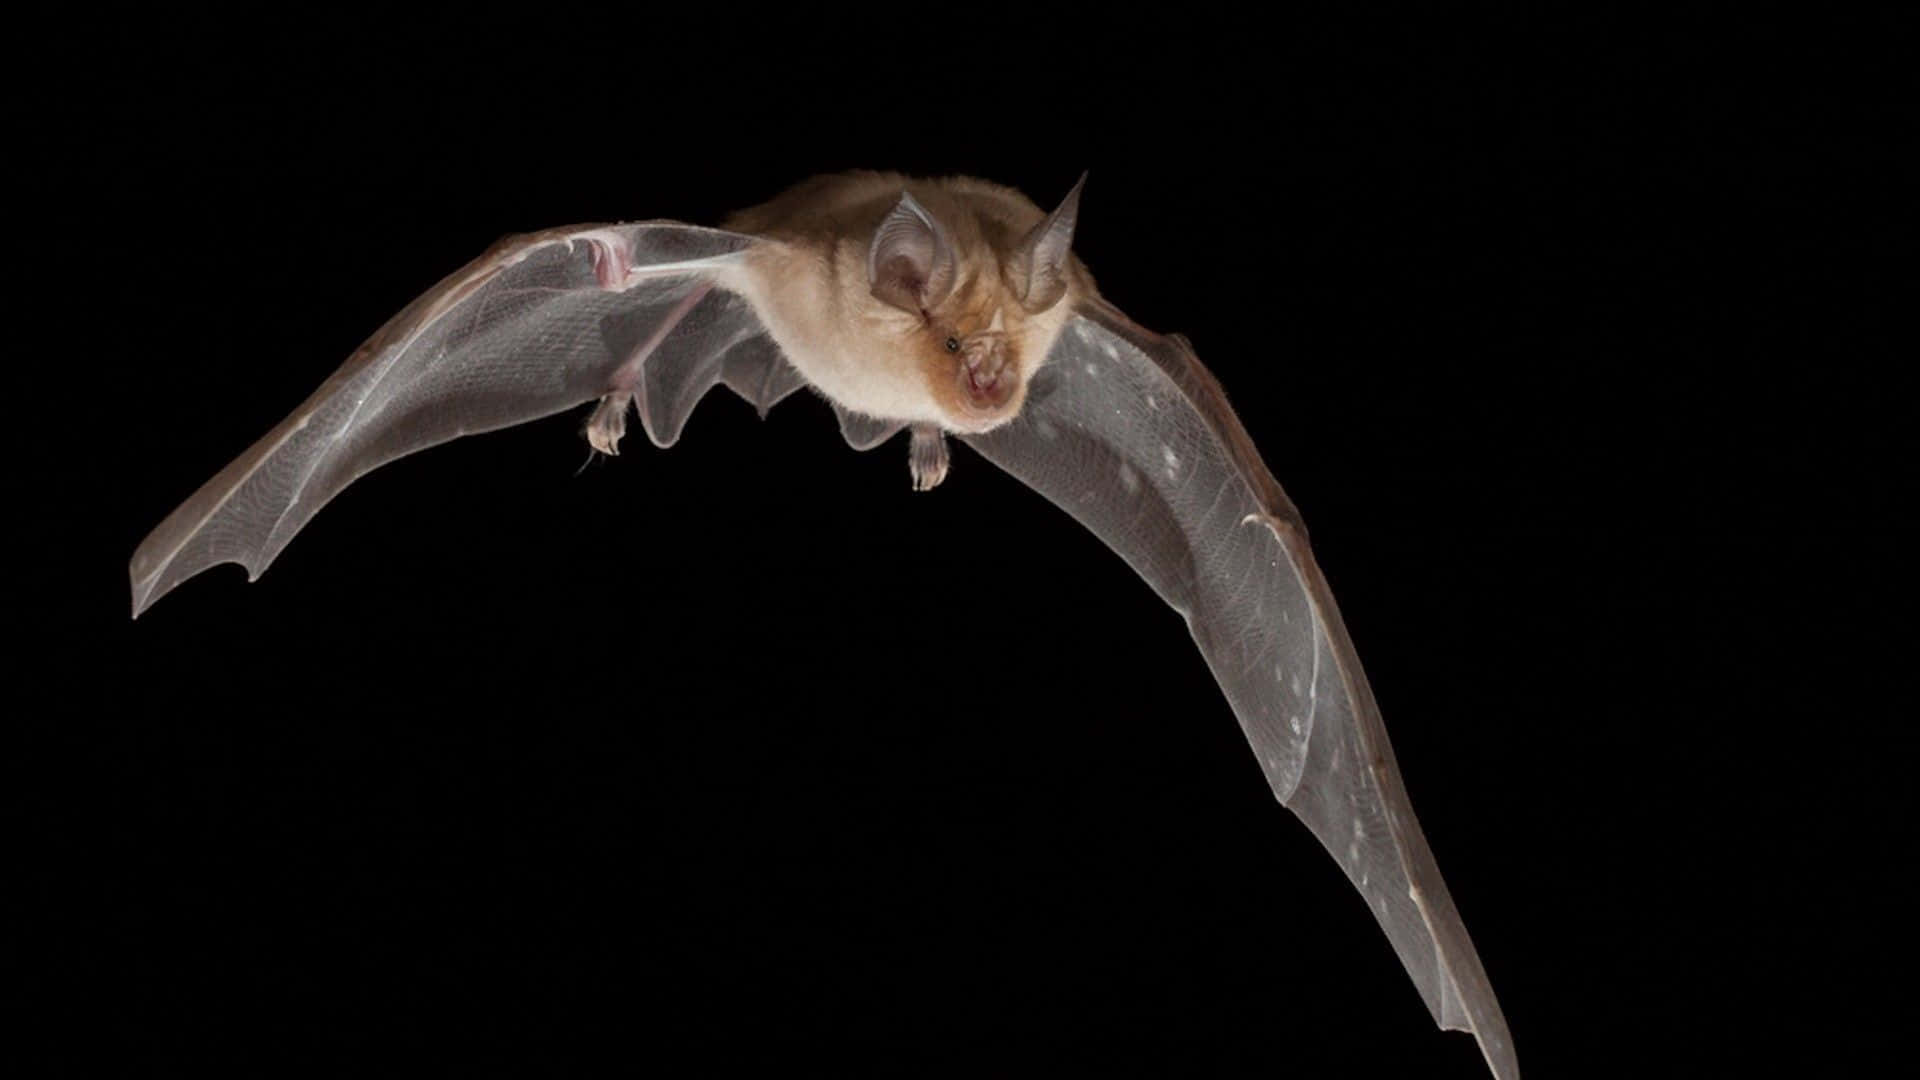 Caption: Majestic Bat in a Dark Sky